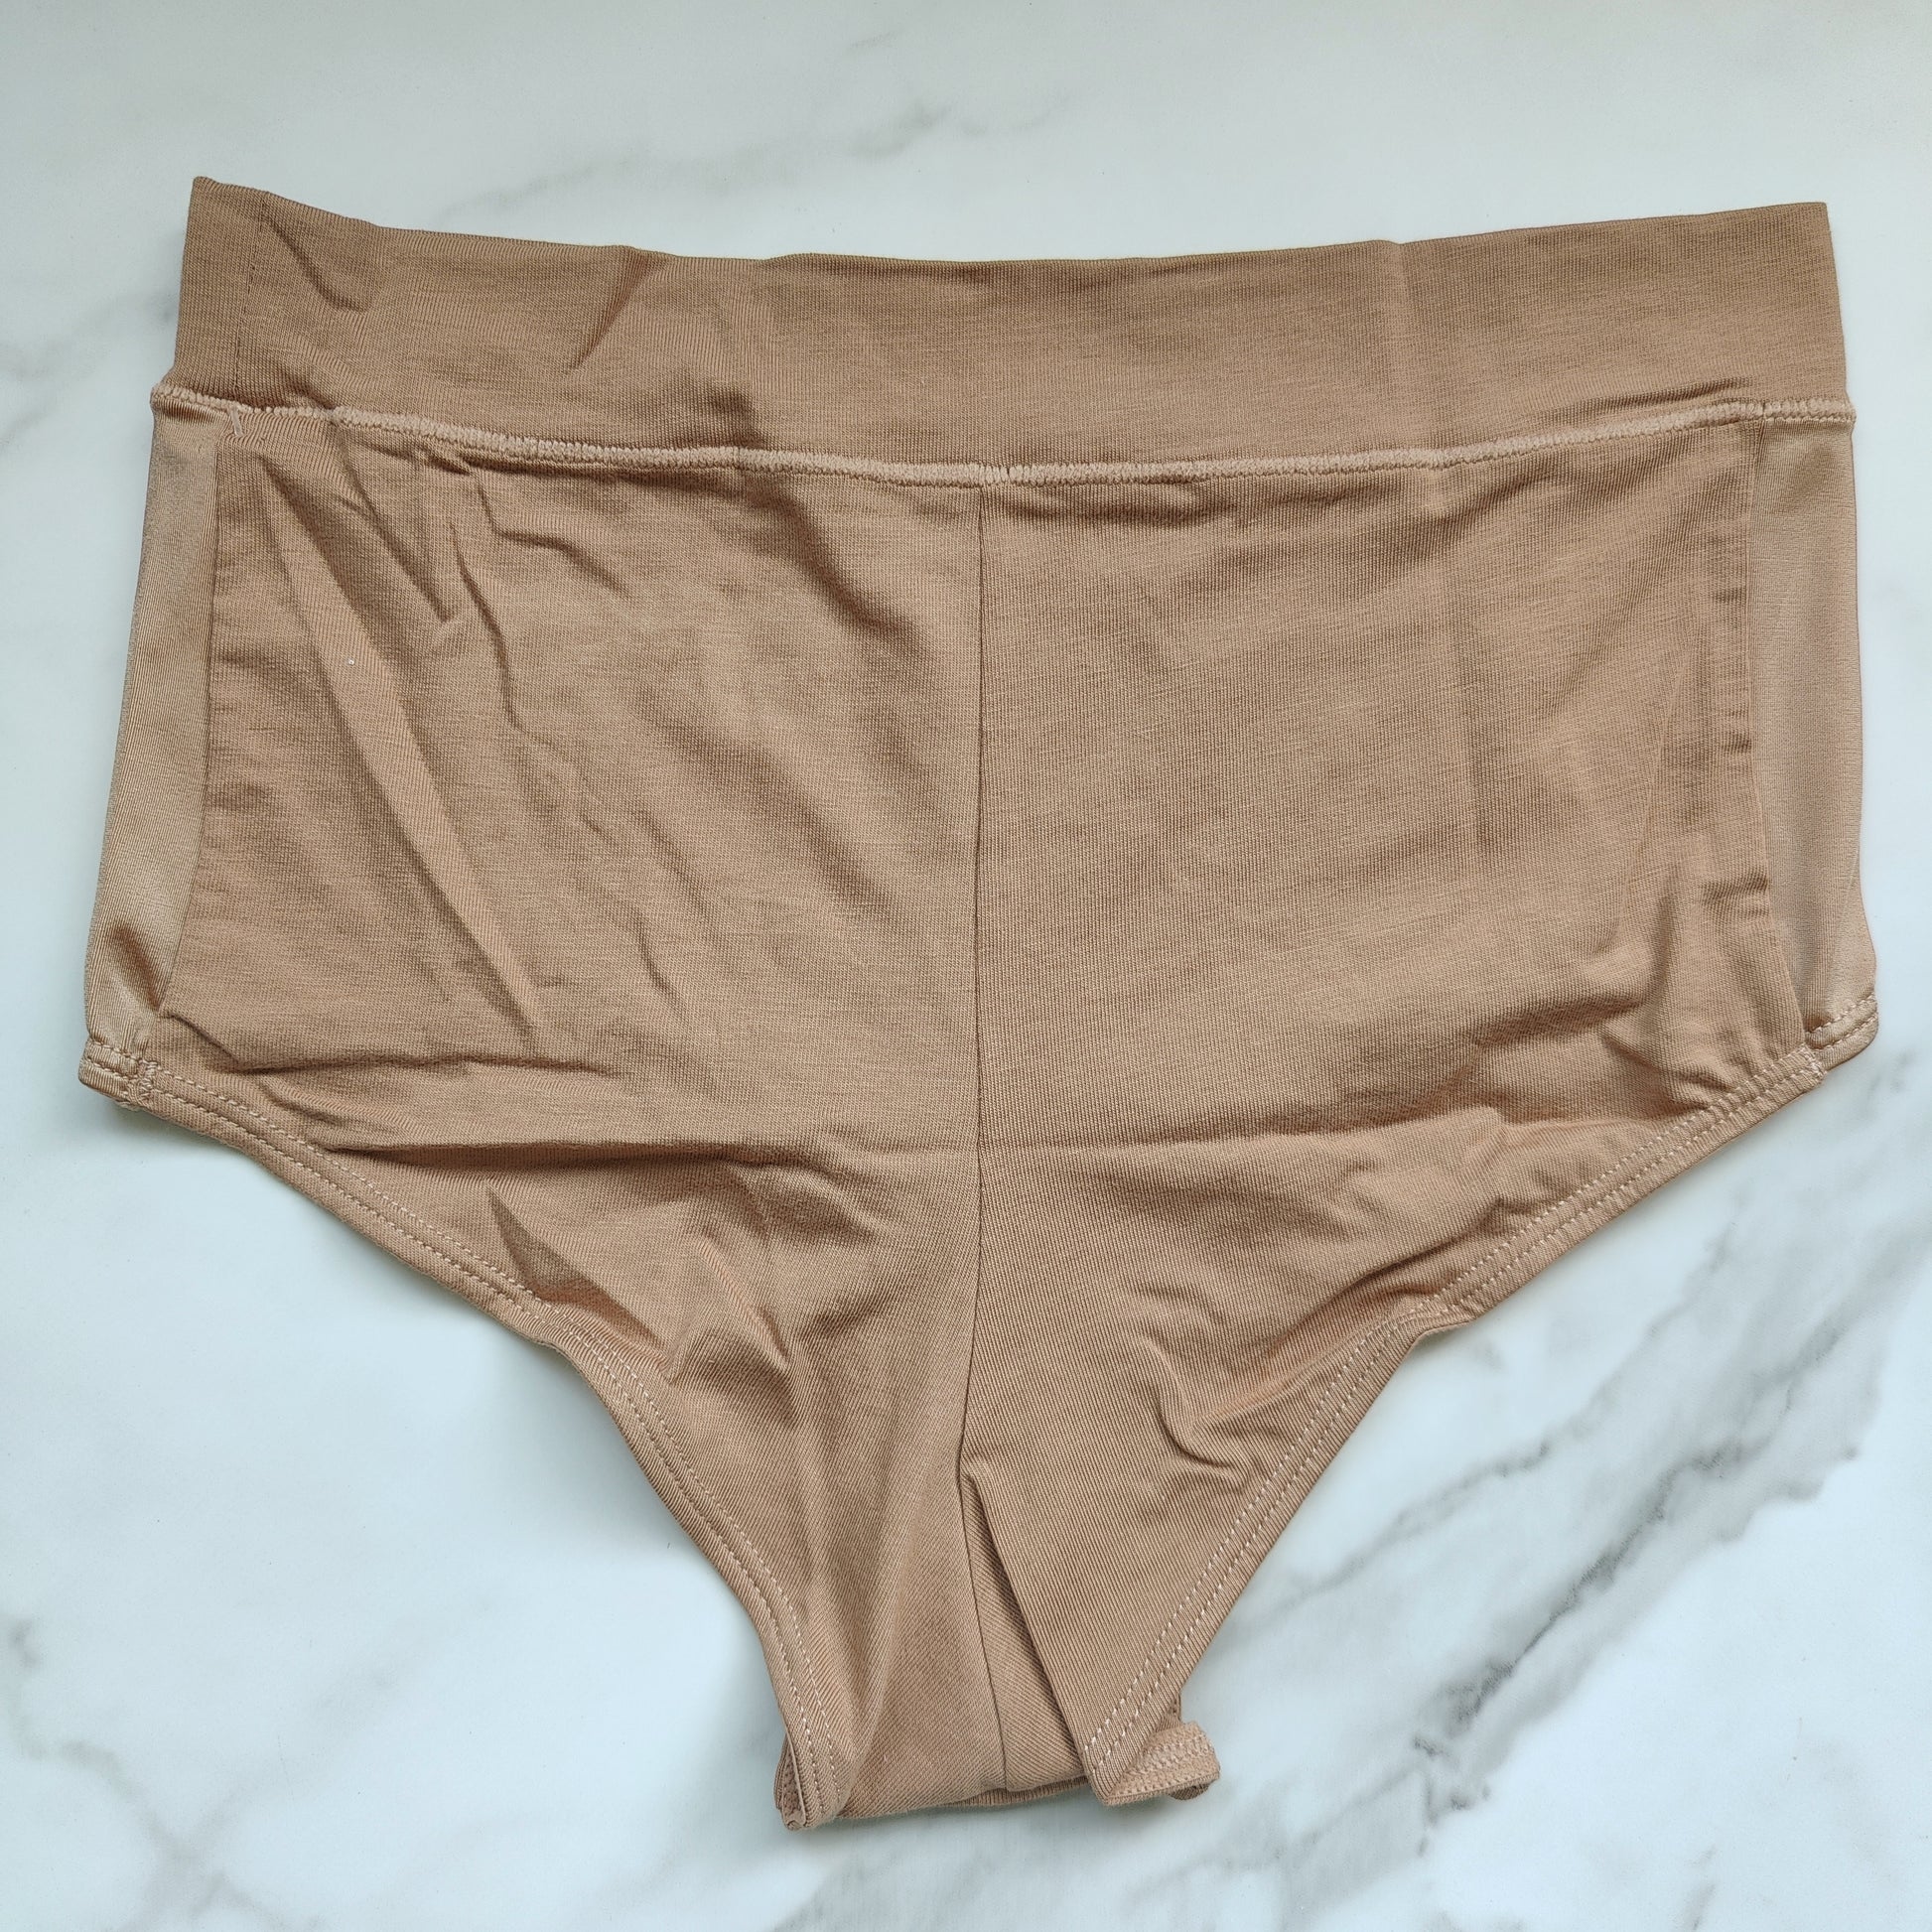 Soma Vanishing Edge Microfiber Boyshort Underwear, Black, size M